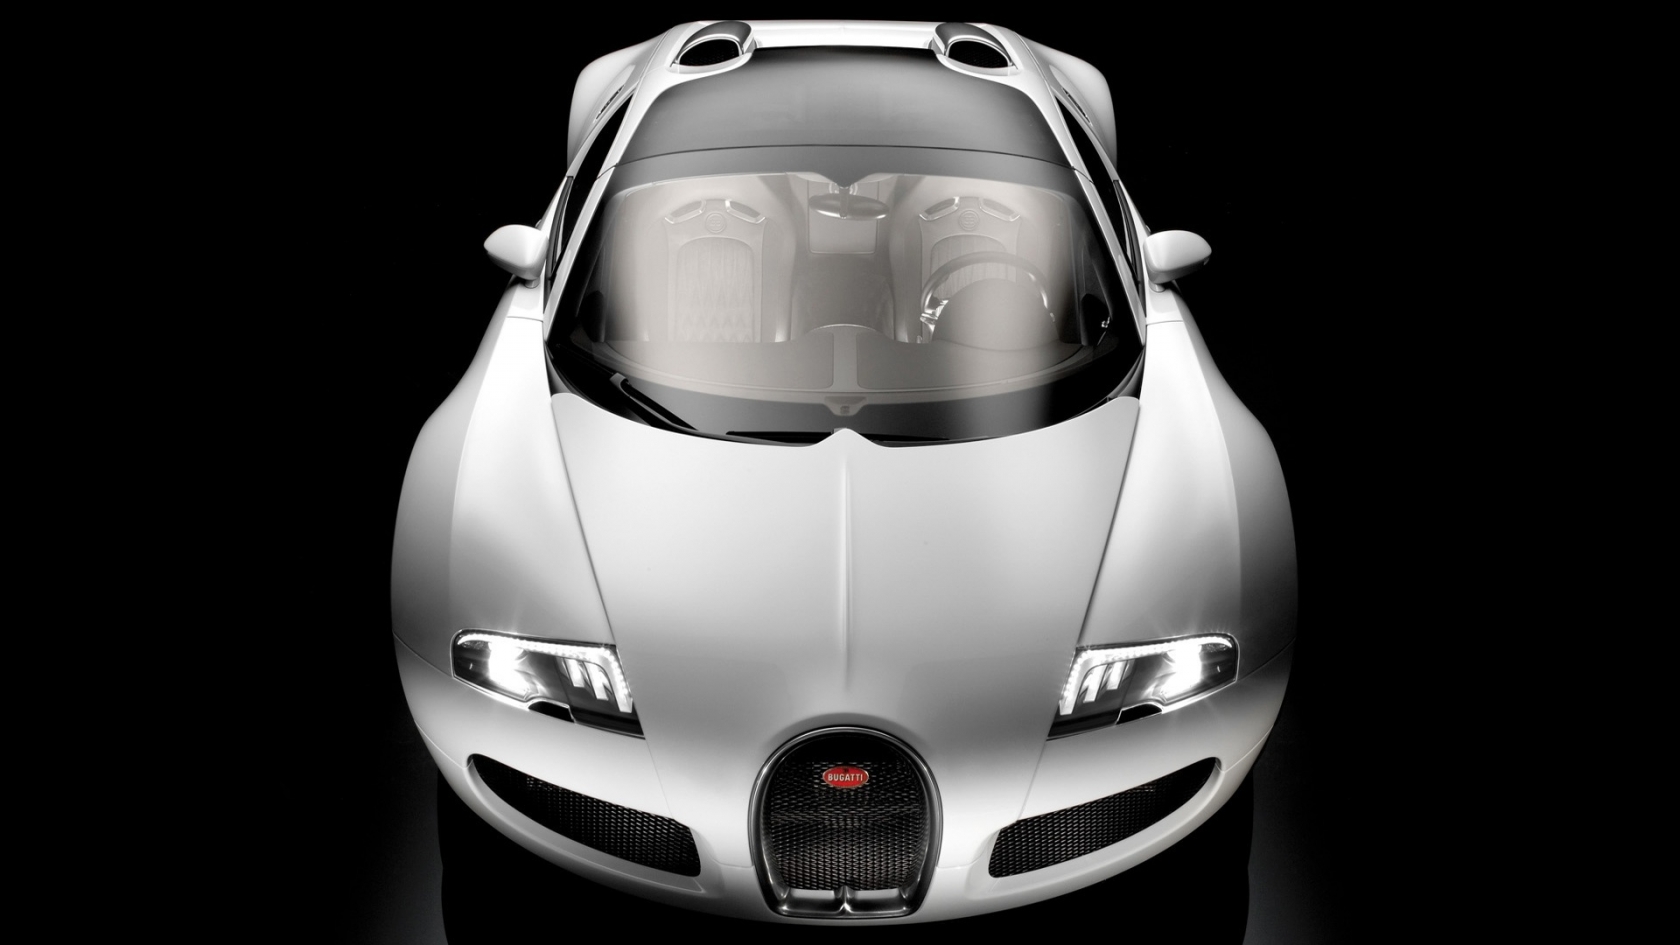 Bugatti Veyron 16.4 Grand Sport 2009 - Front Top Studio for 1680 x 945 HDTV resolution